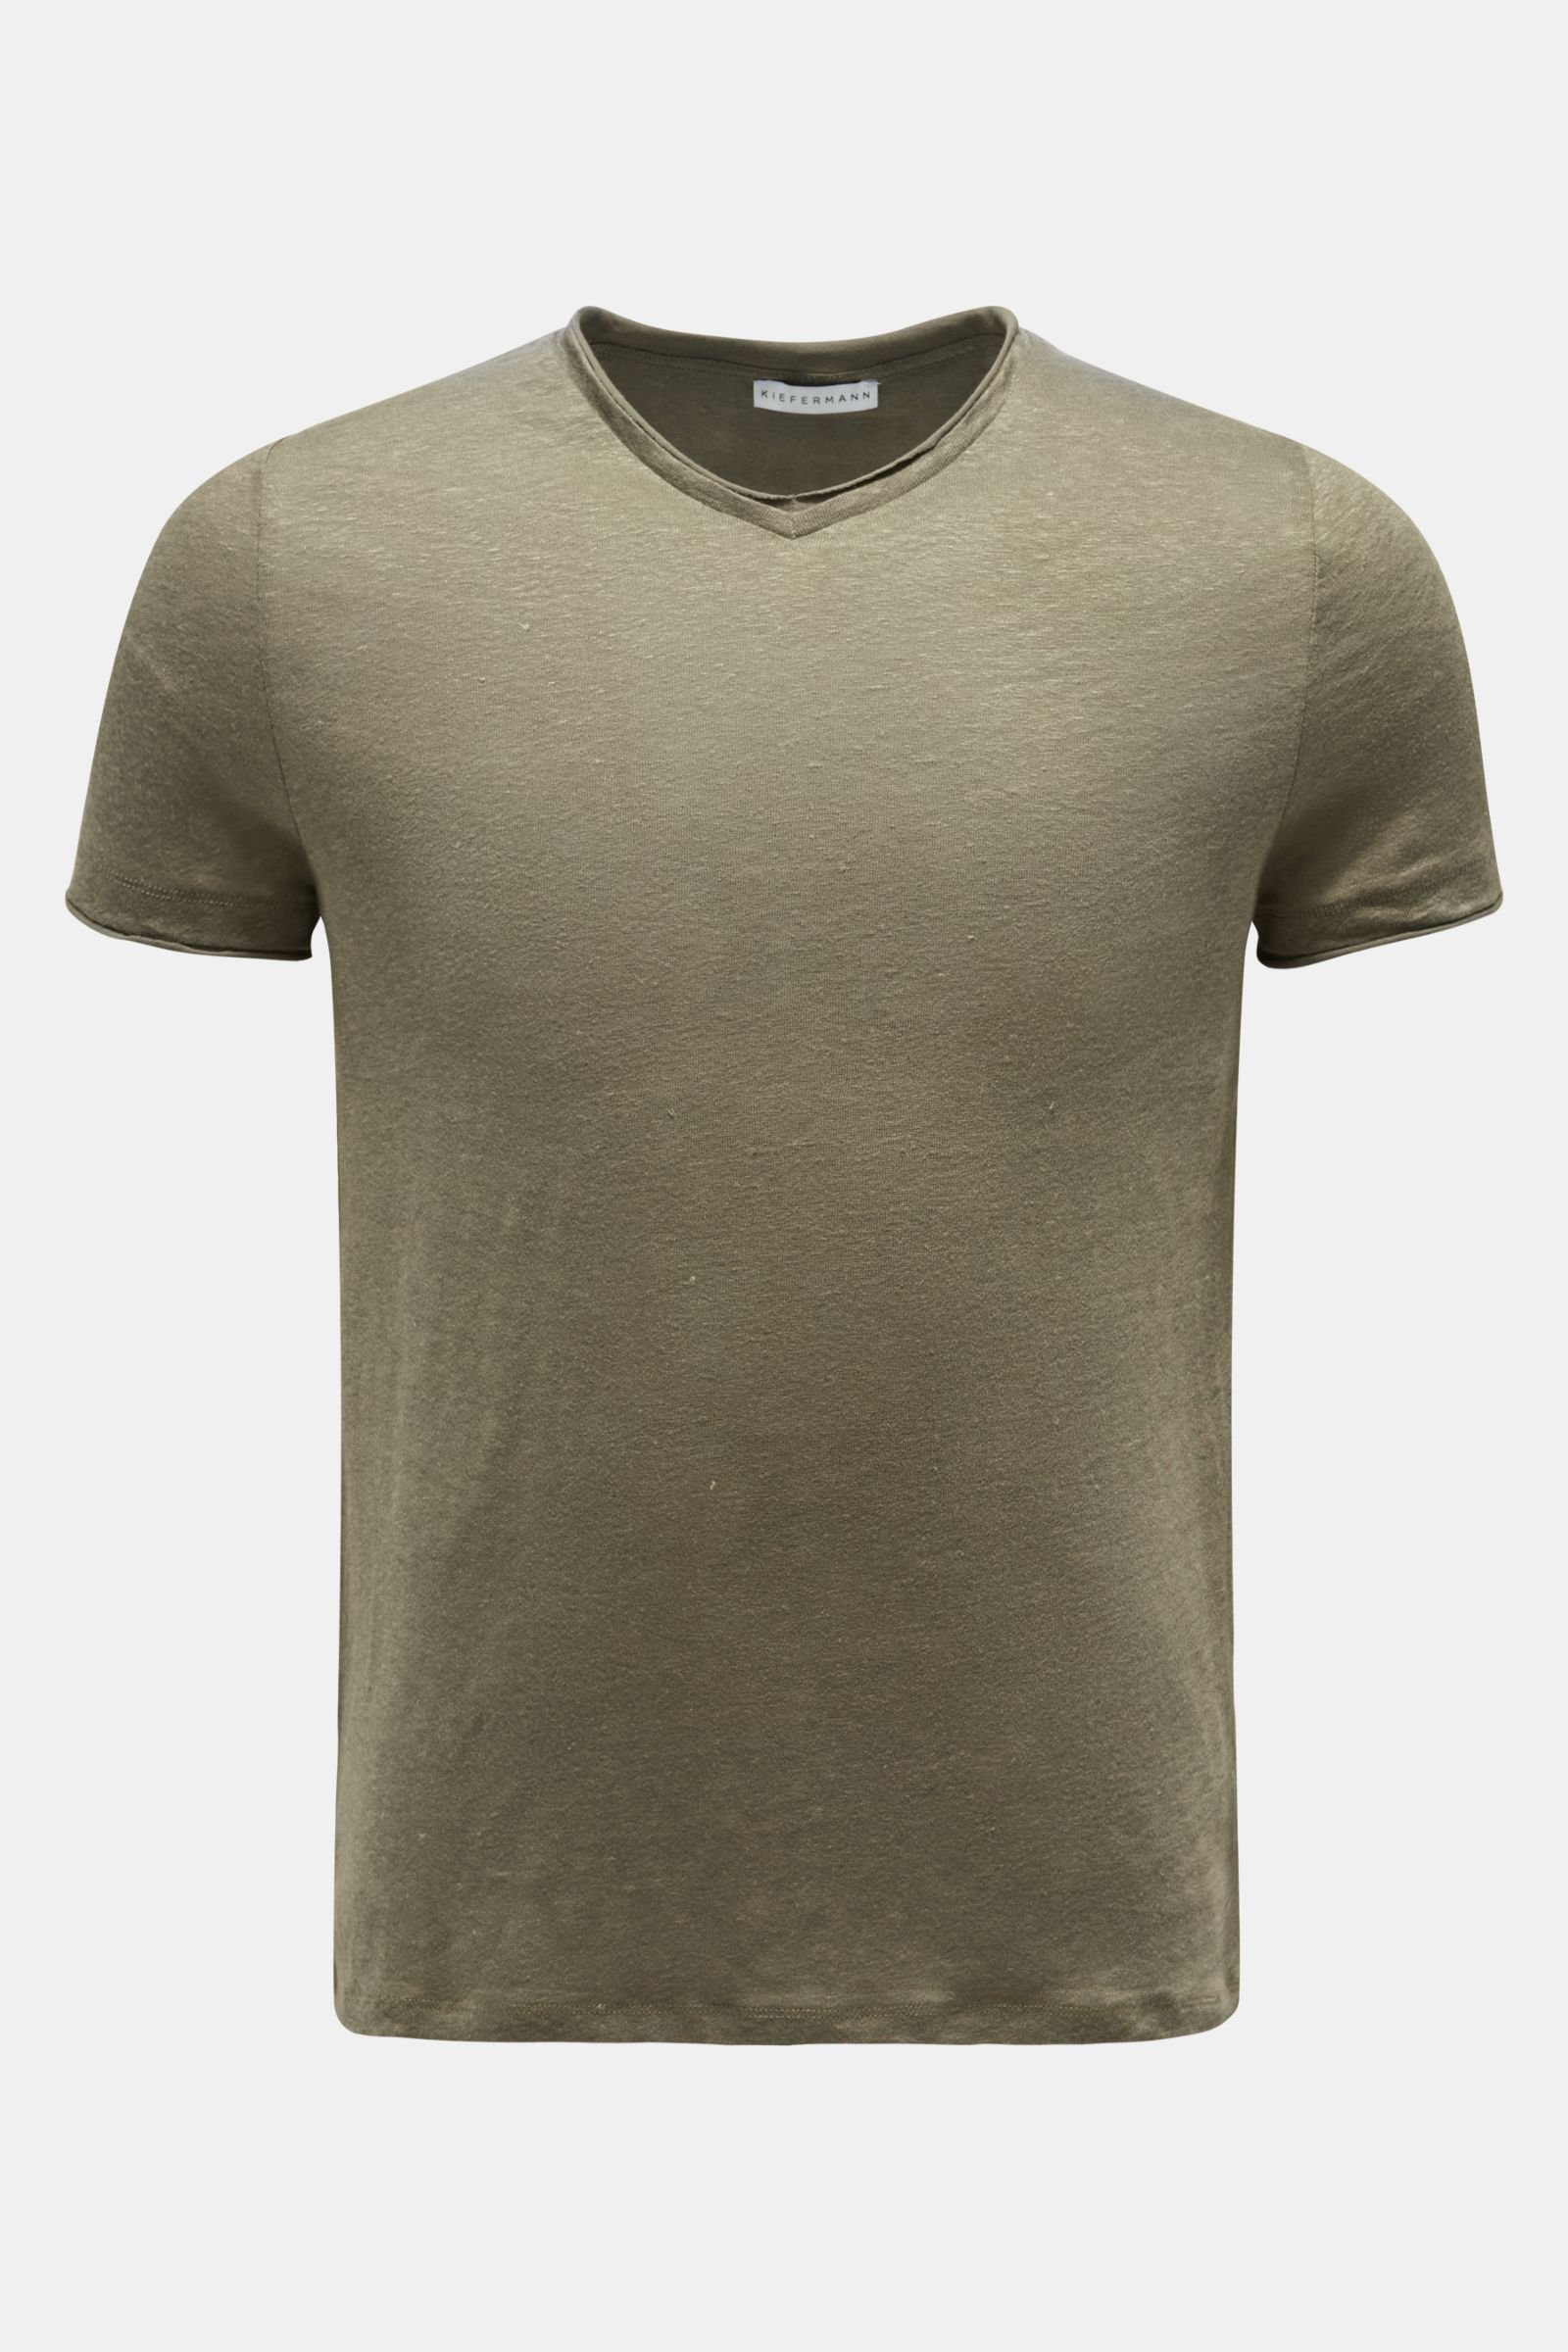 Leinen V-Neck T-Shirt 'Flynn' oliv